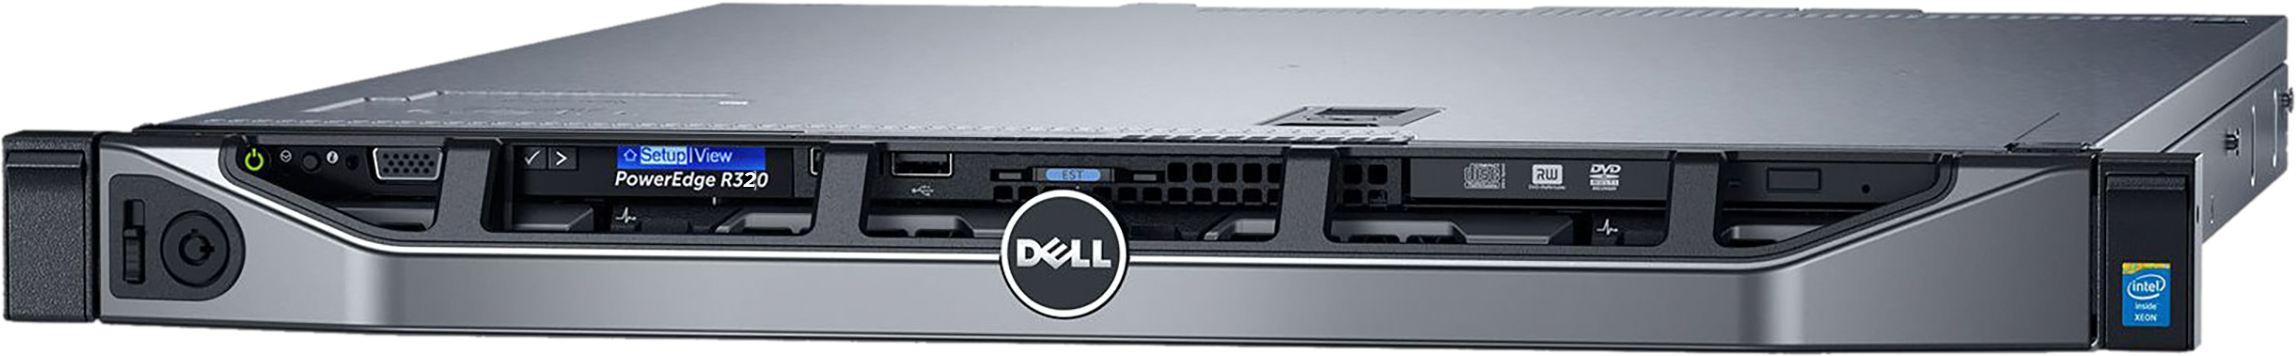 Аренда физического сервера Dell R320 / 1×E5-2430 v2 / 16 GB RAM / 4 × 6 TB HDD / H310